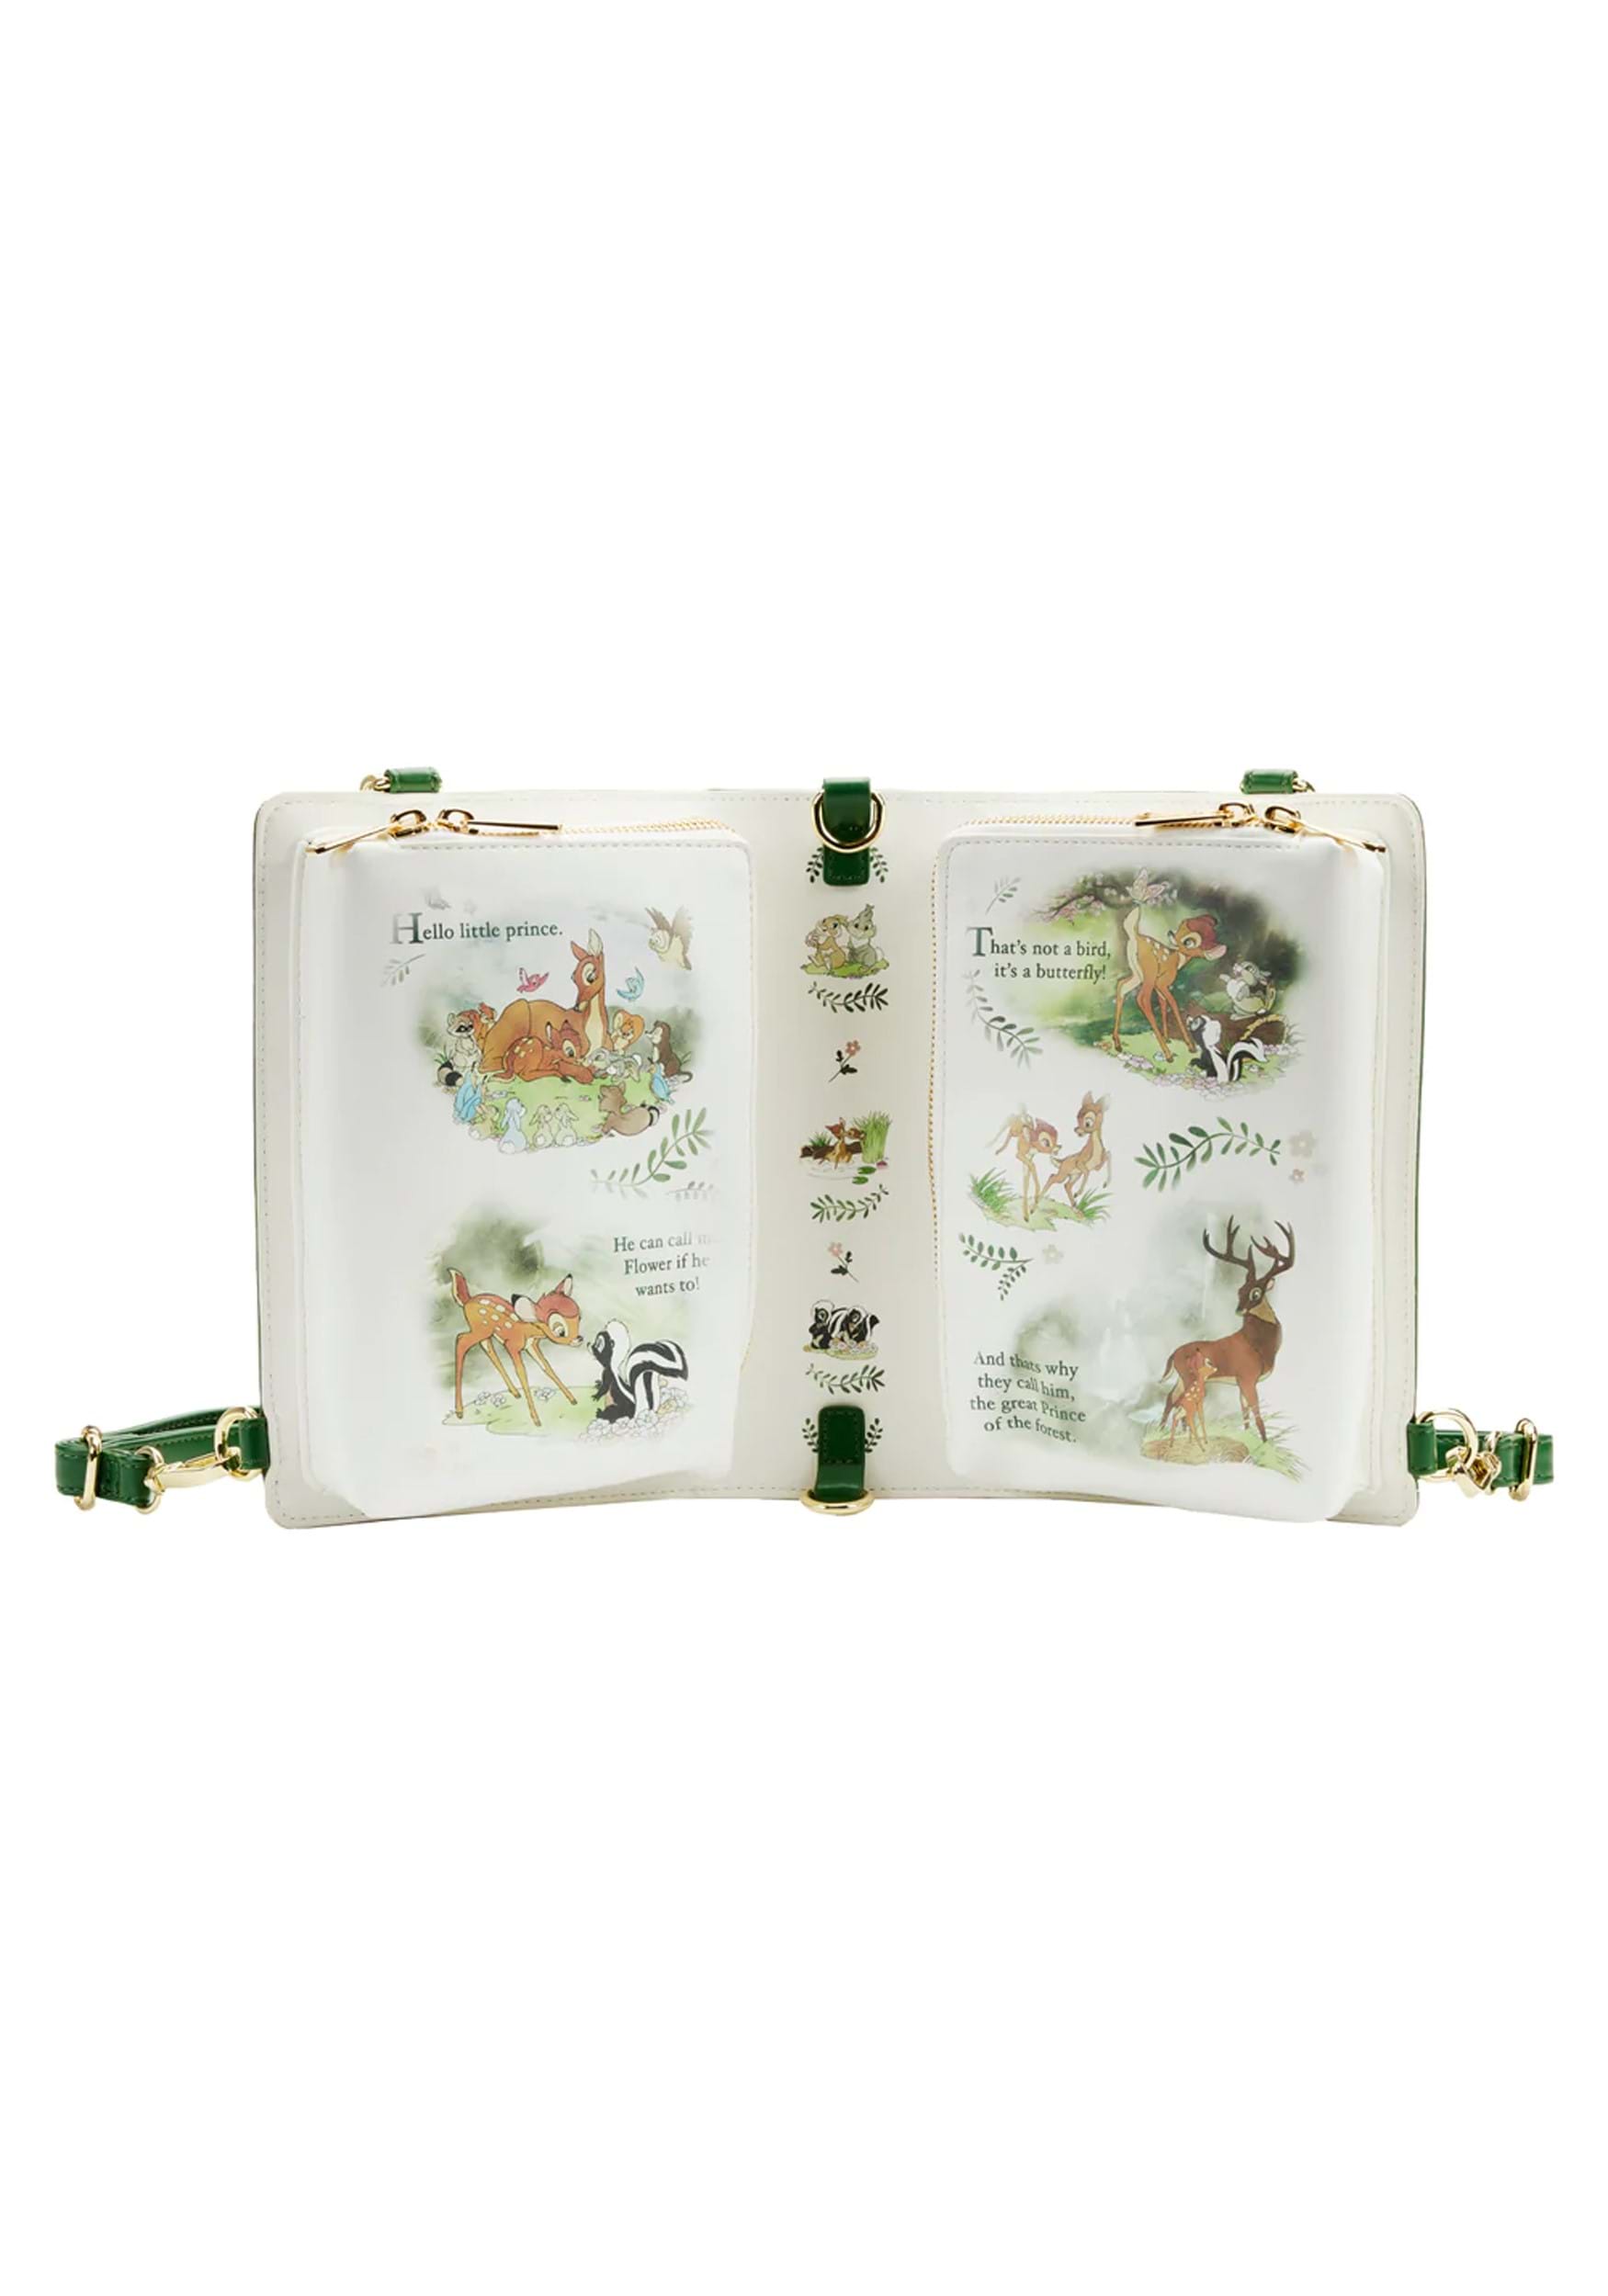 Loungefly Disney Classic Books Bambi Convertible Crossbody Purse